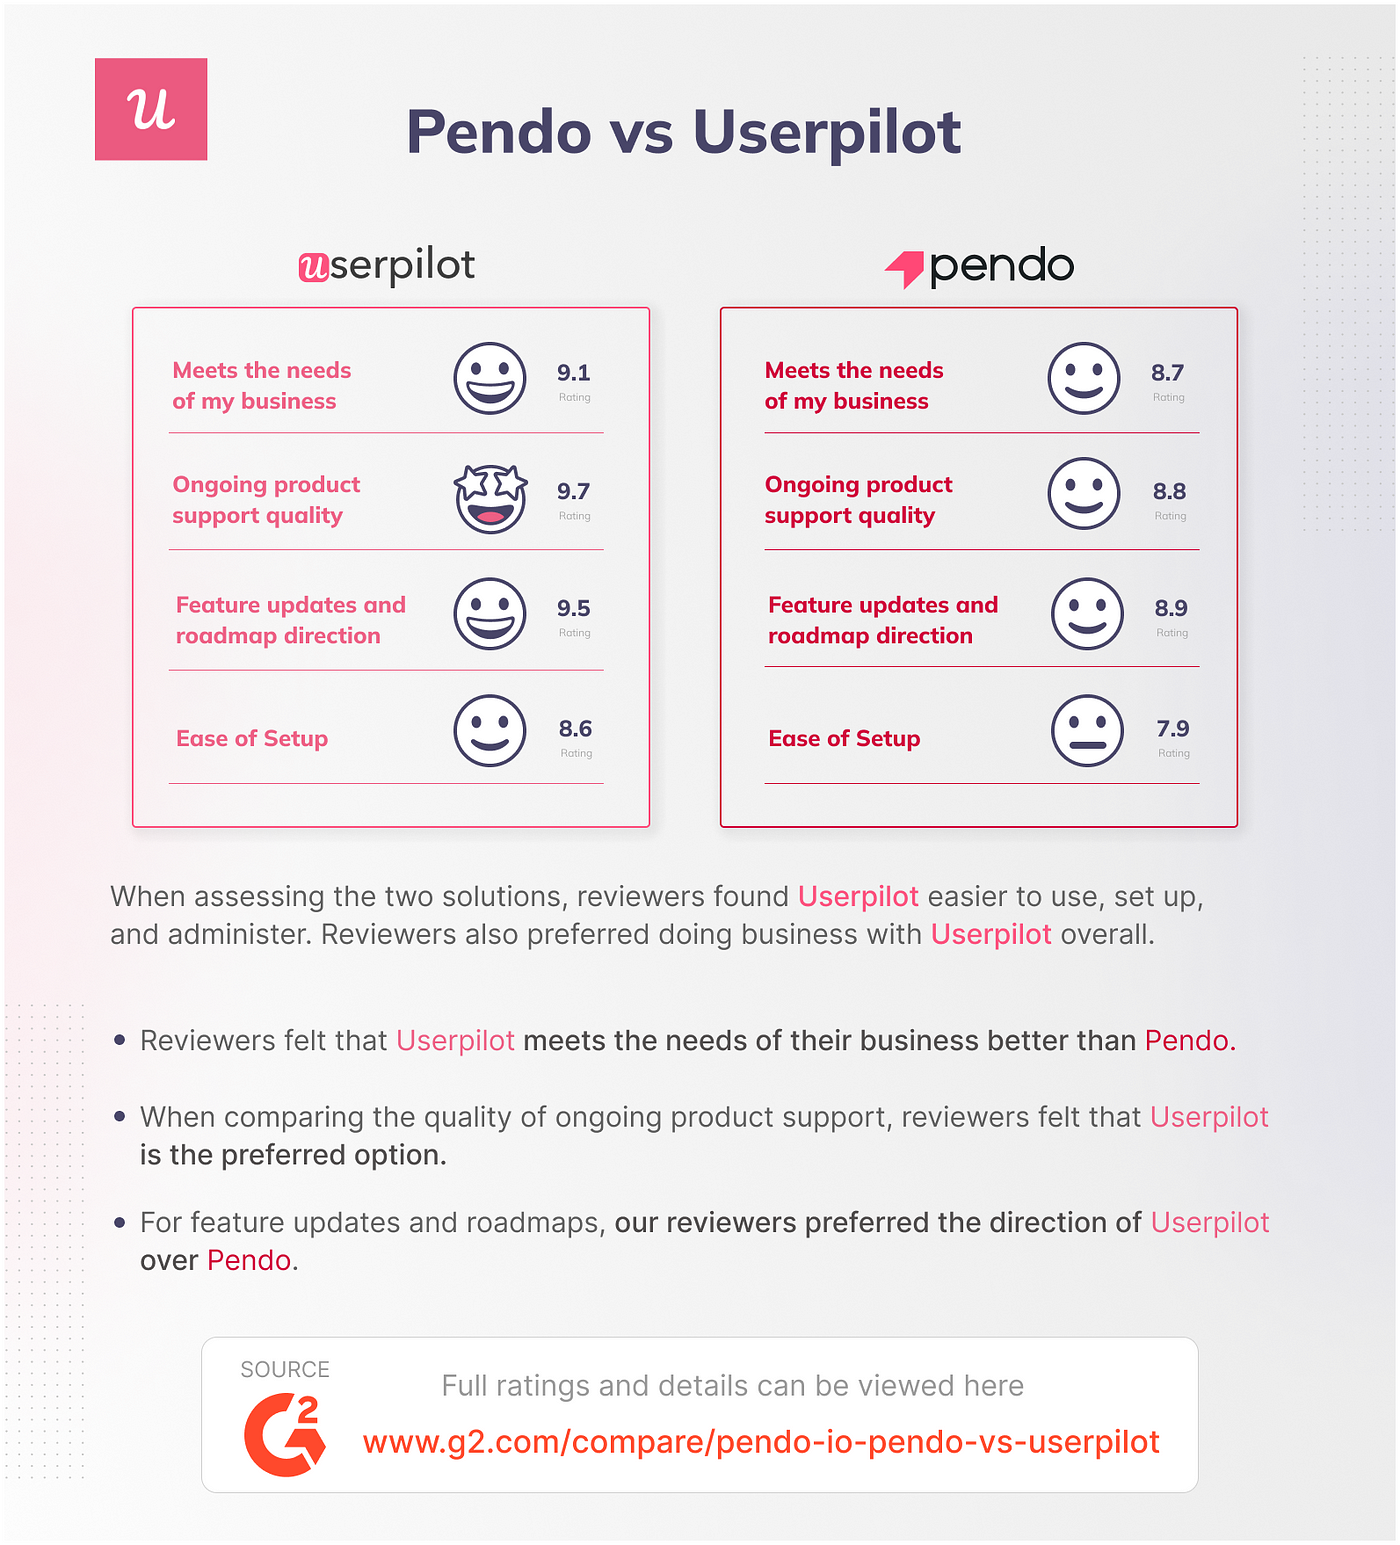 Visual of Userpilot versus Pendo advantages.